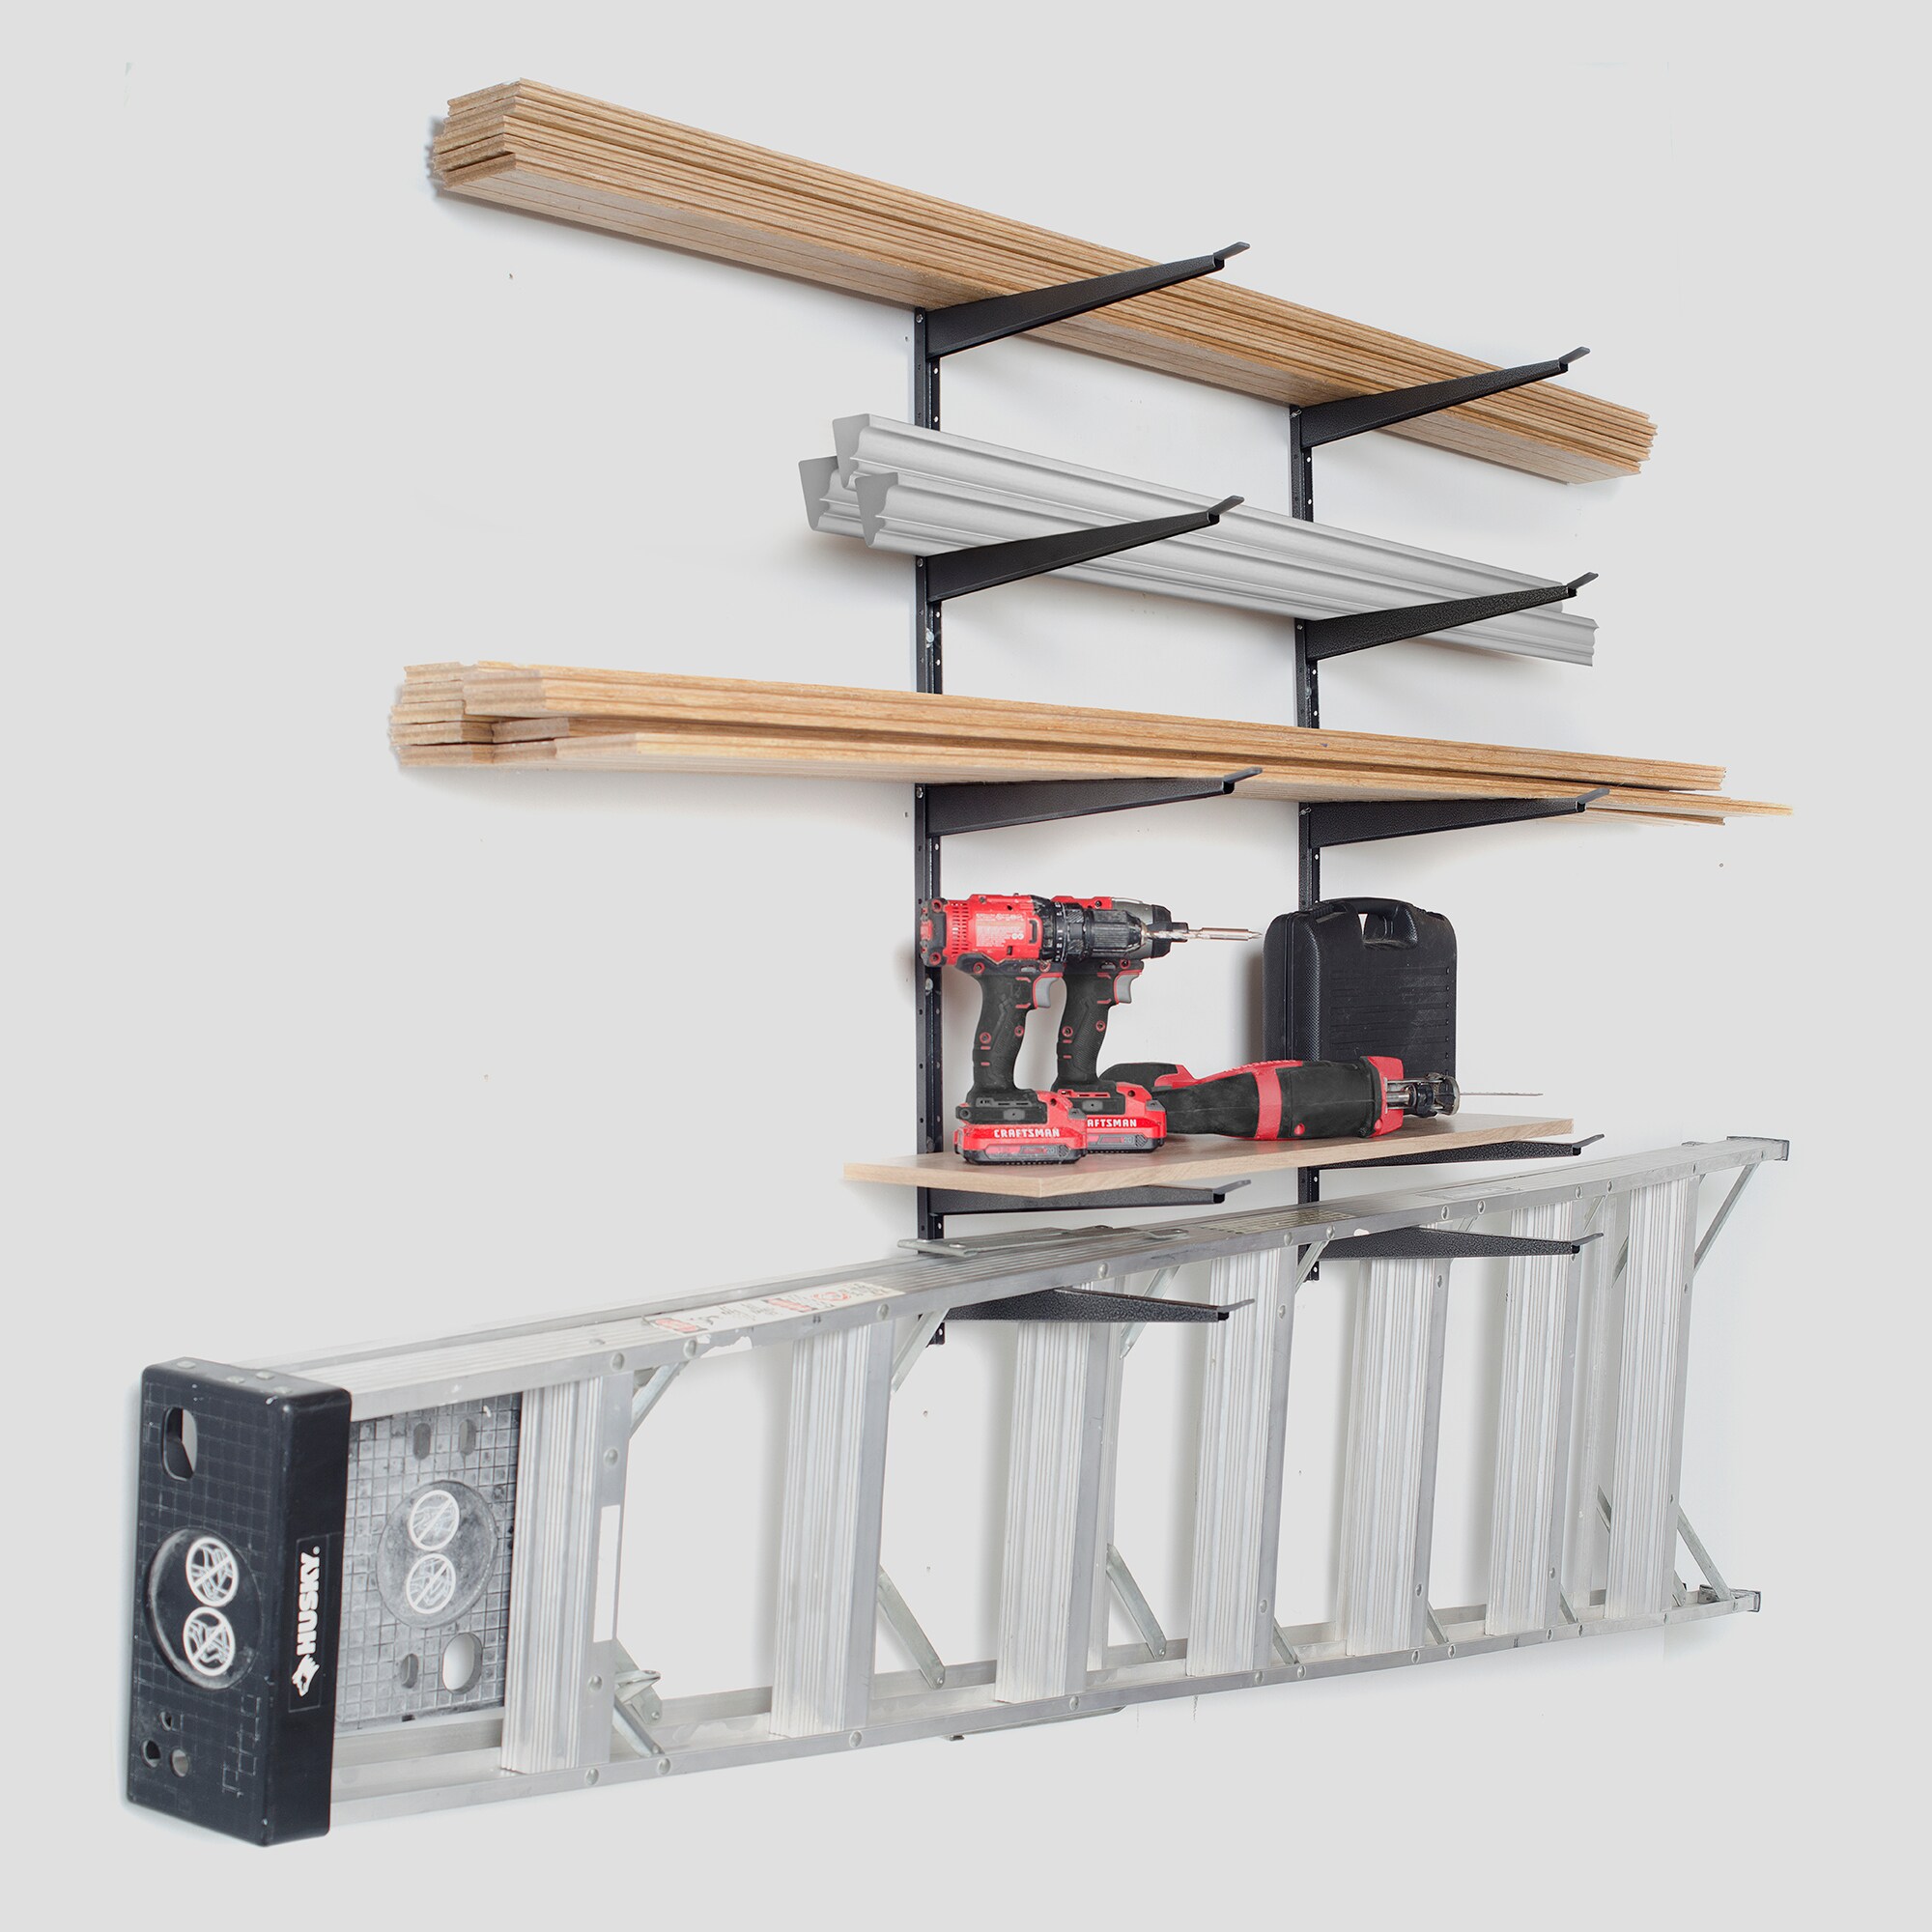 Delta 16 in. x 21 in. Heavy Duty Wall Rack Adjustable 3 Tier Lumber Rack  Holds 480 lbs. Steel Garage Wall Shelf with Brackets HDRS1000HD - The Home  Depot